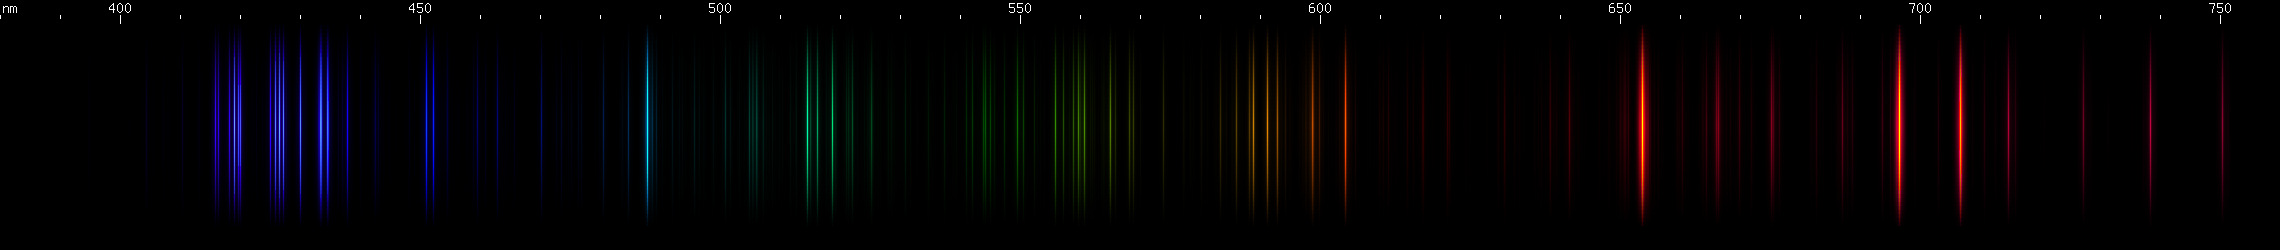 Spectral lines of Argon.